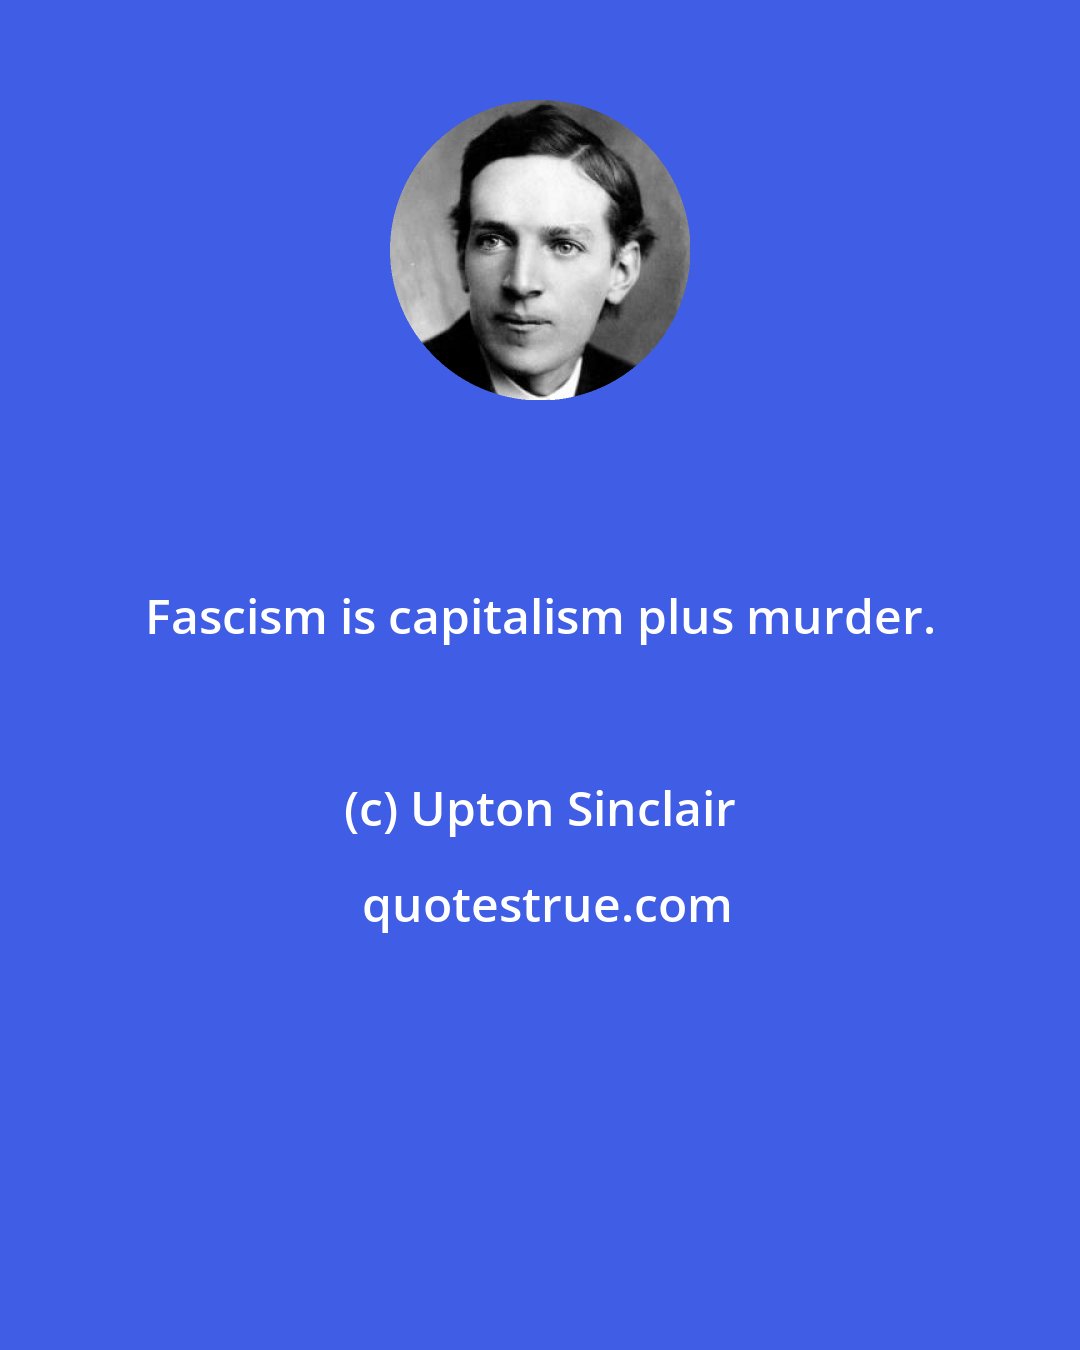 Upton Sinclair: Fascism is capitalism plus murder.